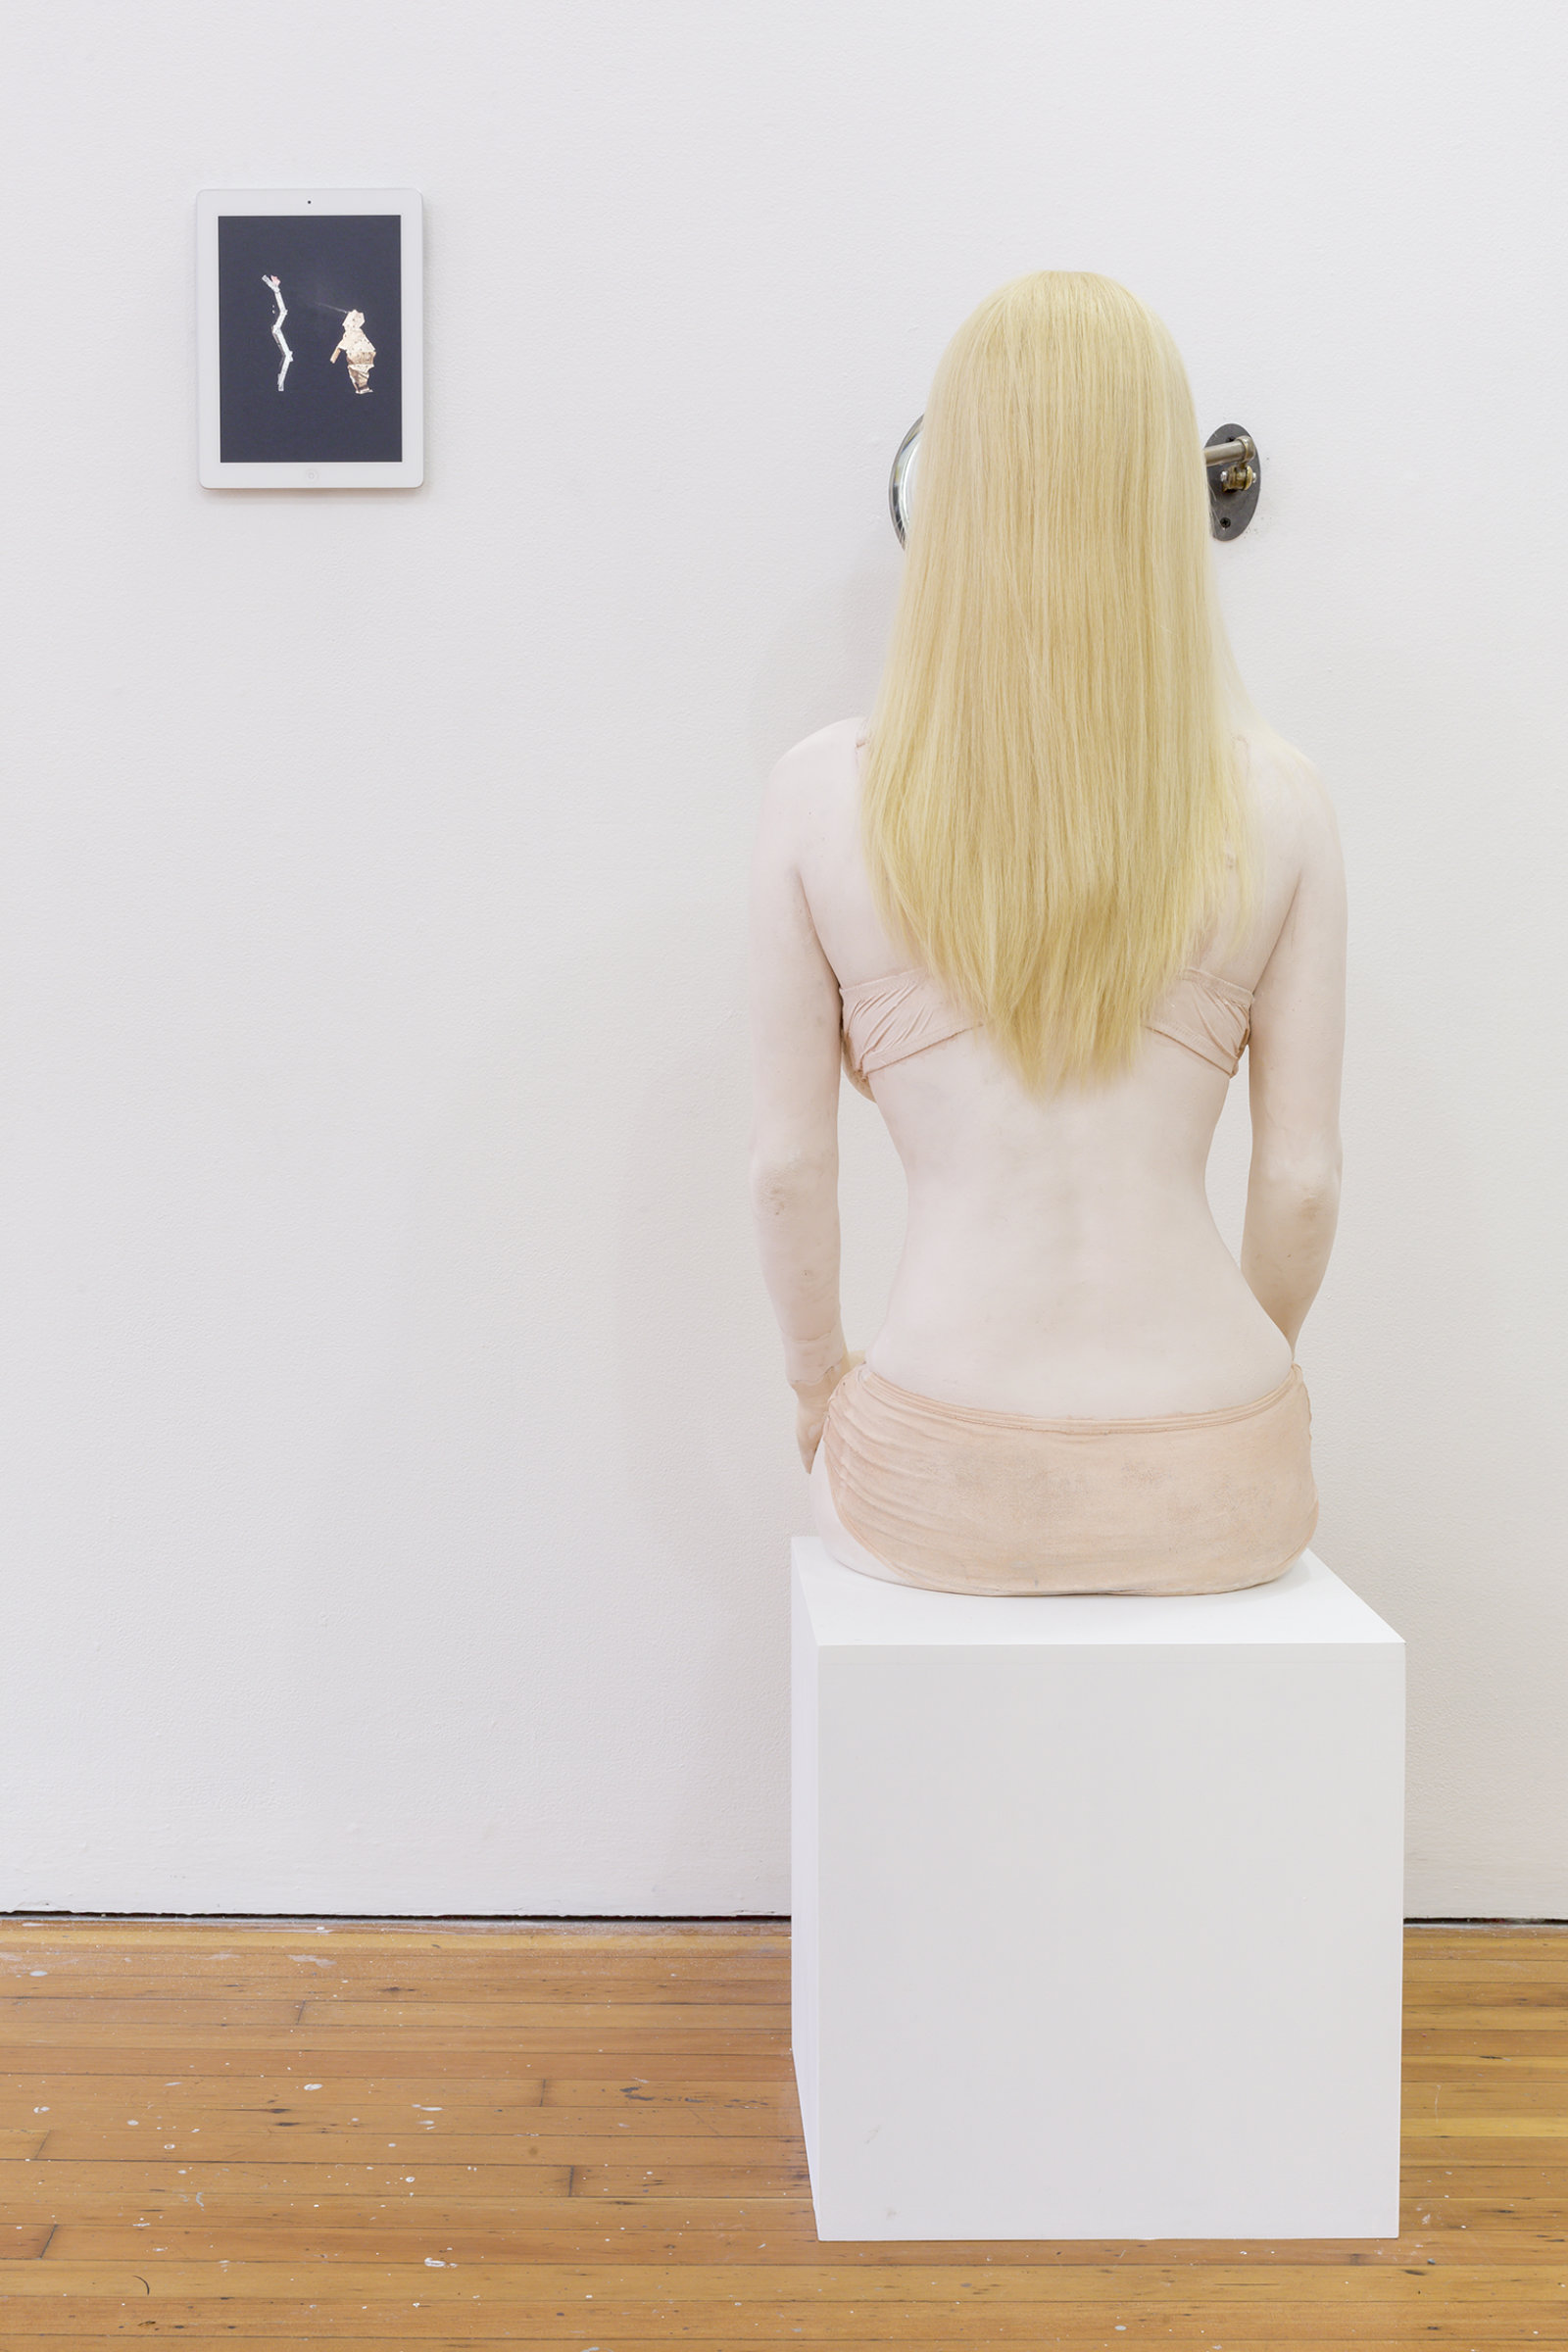 Valérie Blass, Dr. Mabuse Psychanalyste, 2014, forton, wig, mirror, modeling clay, plinth, 51 x 24 x 17 in. (130 x 61 x 42 cm)